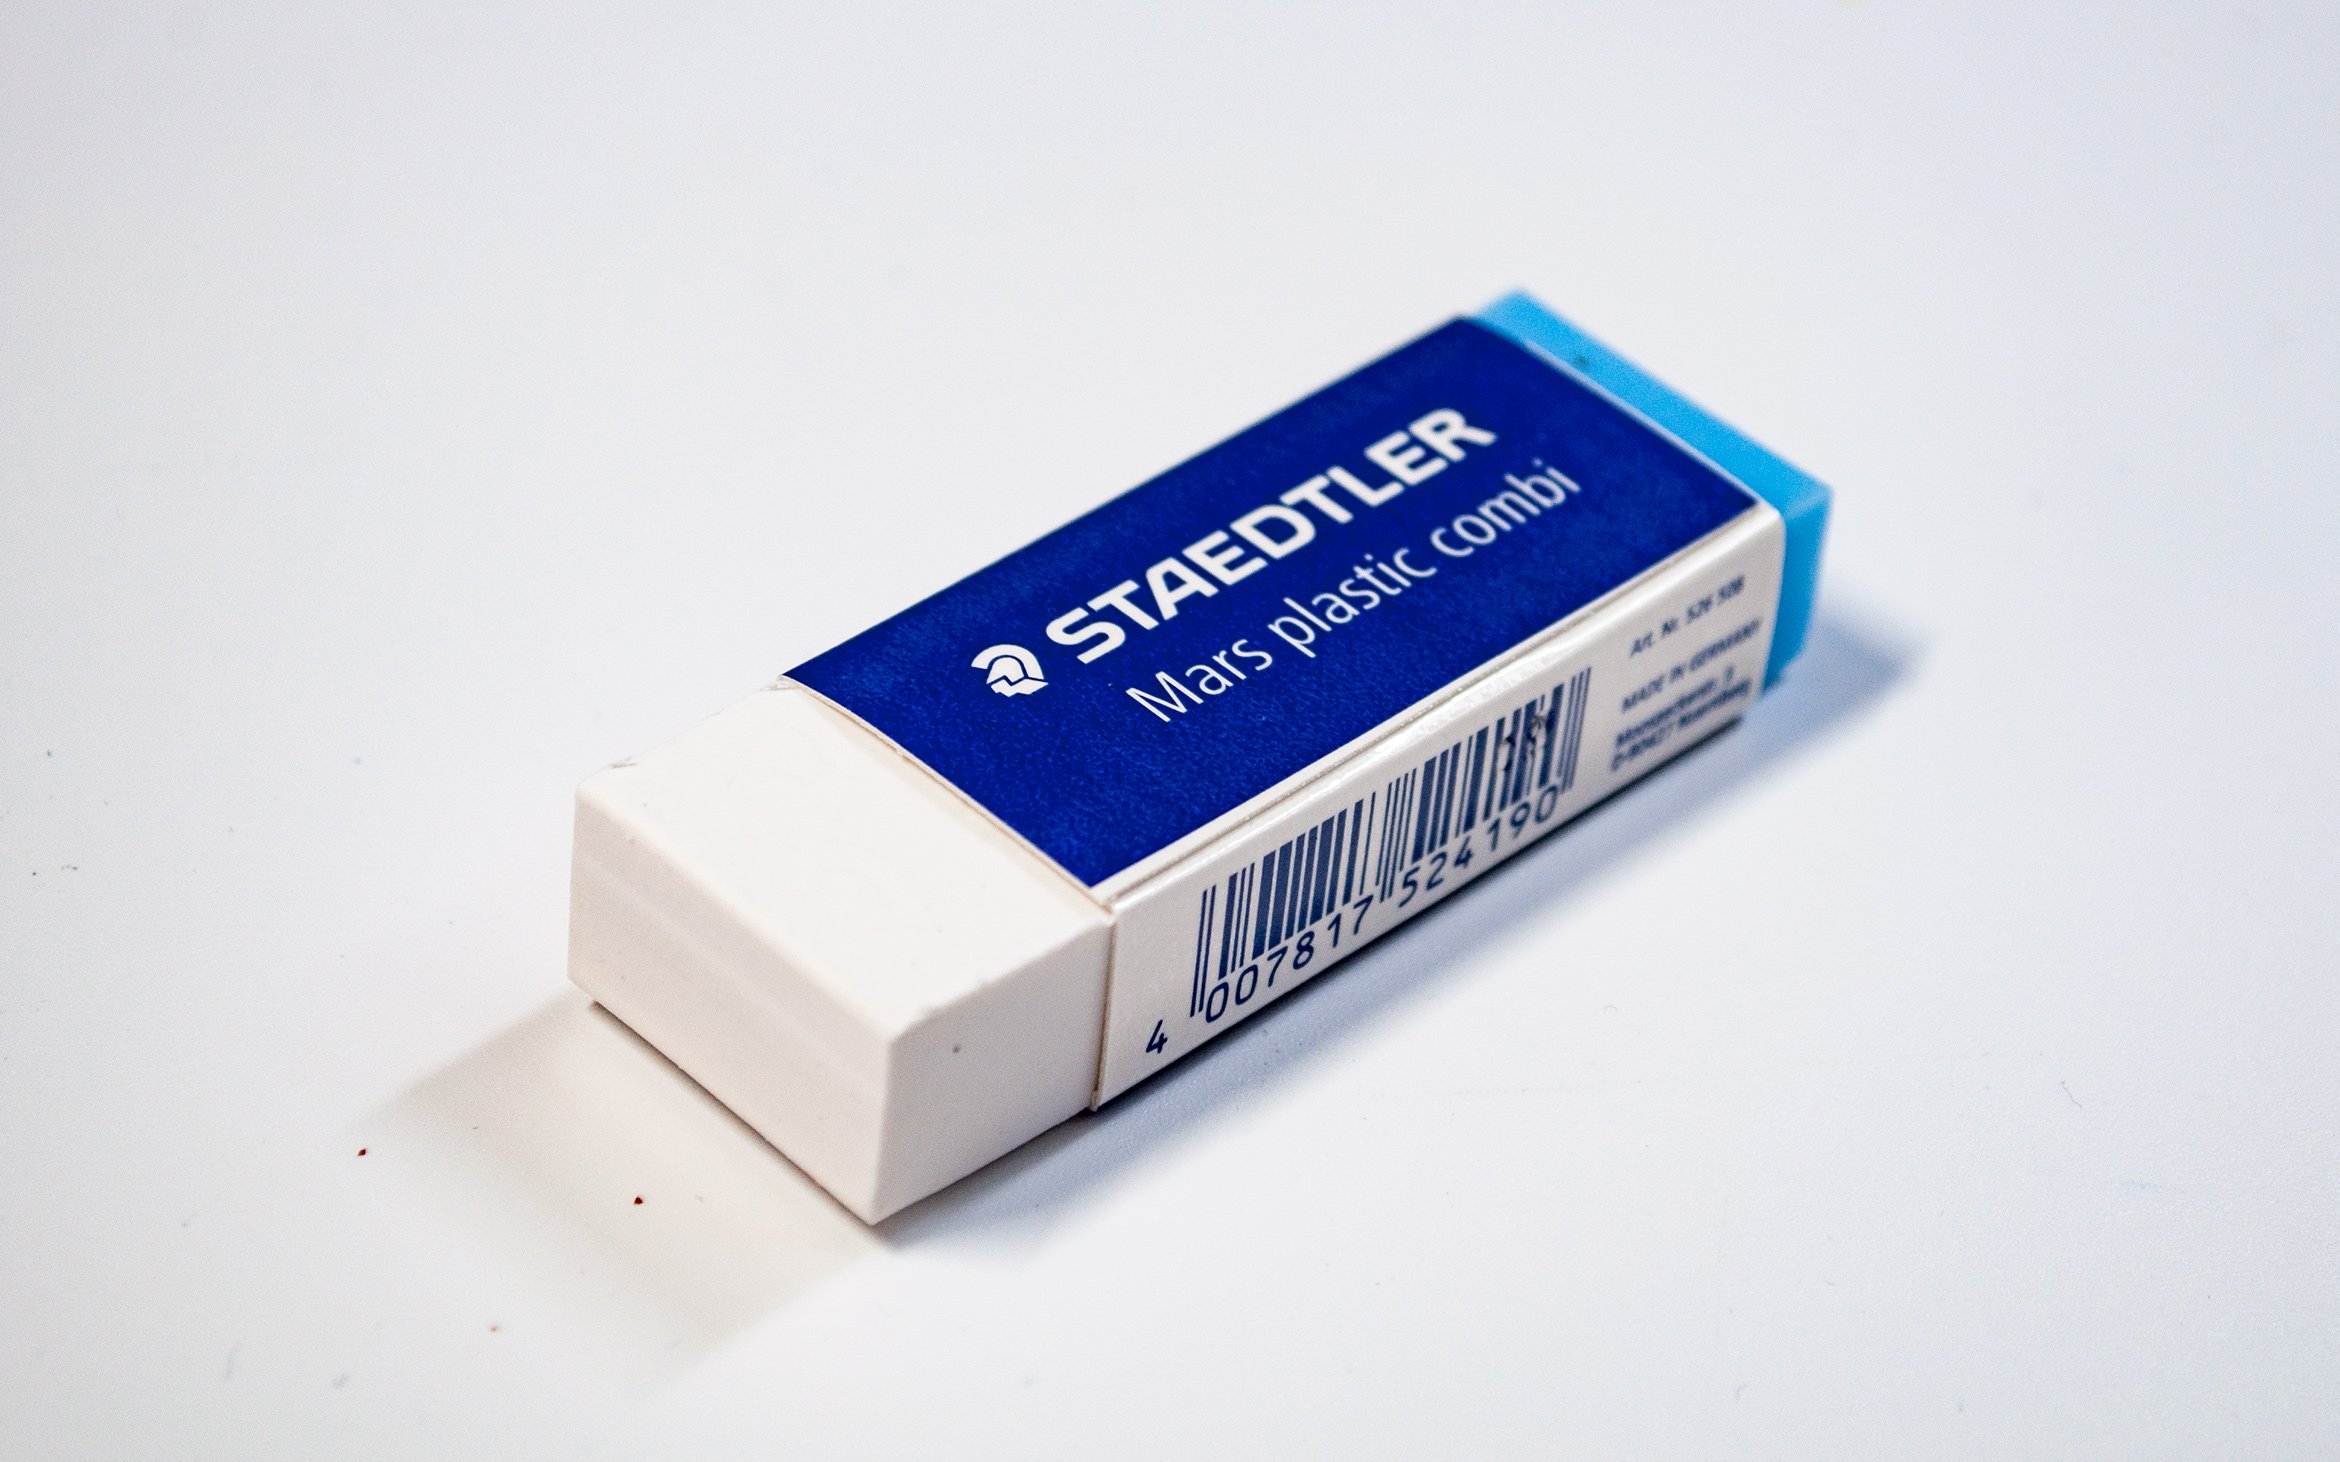 STAEDTLER Art Eraser, Premium Quality Black Eraser, India